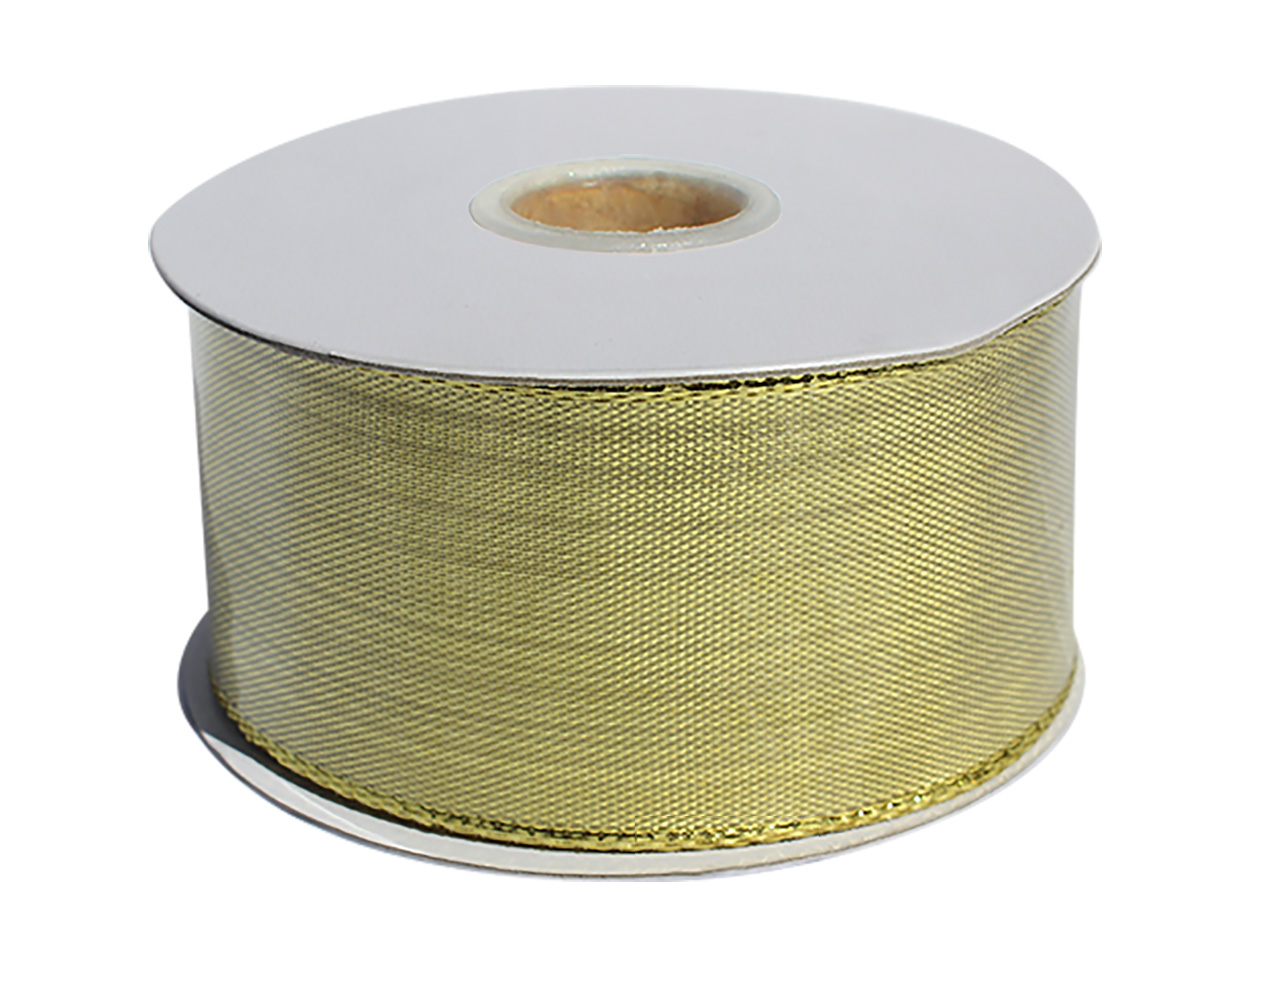 Gold Ribbon - 1.5 inch